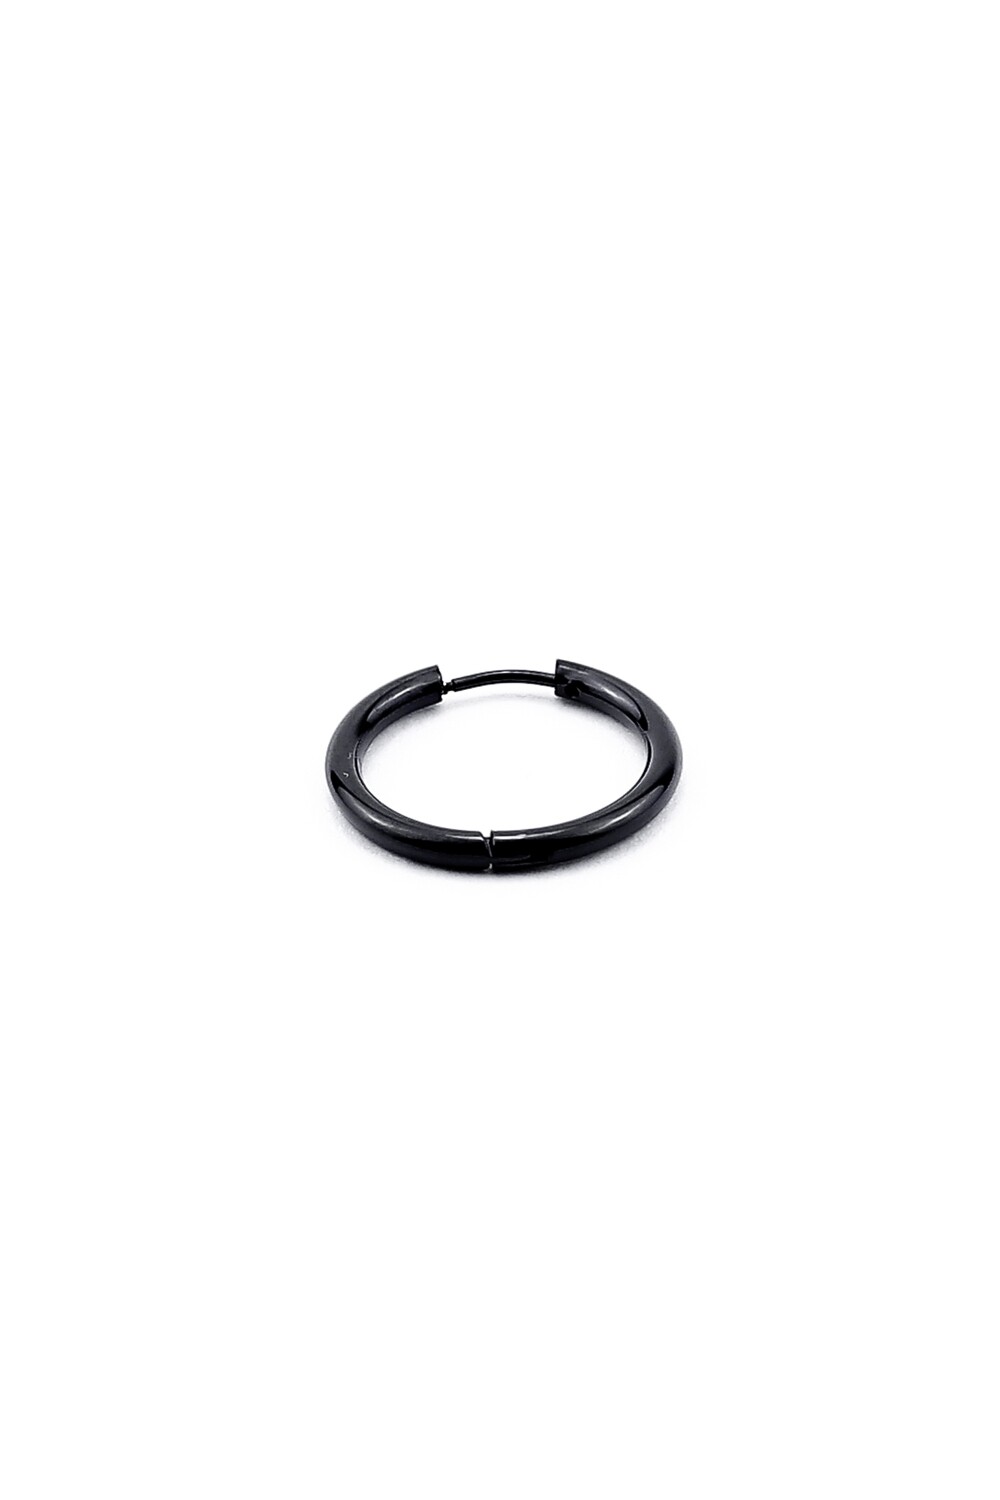 Single earring "Thin Black Ring"